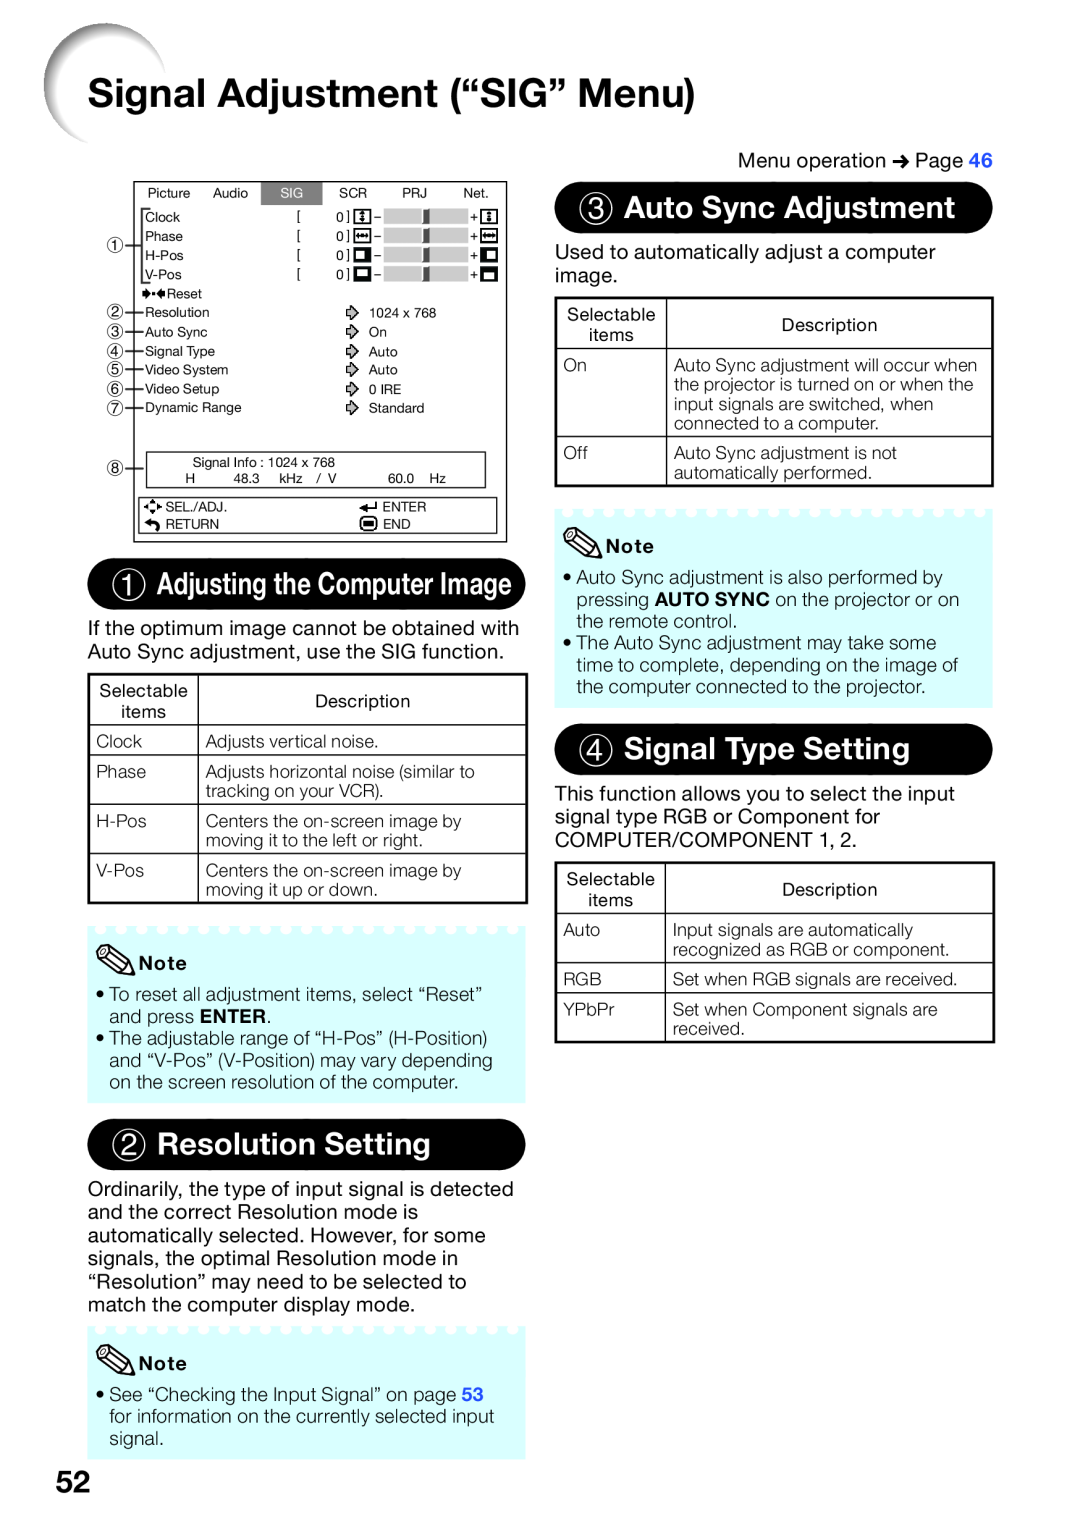 Sharp XG-SV200X, XG-SV100W Signal Adjustment “SIG” Menu, Auto Sync Adjustment, Signal Type Setting, Resolution Setting 